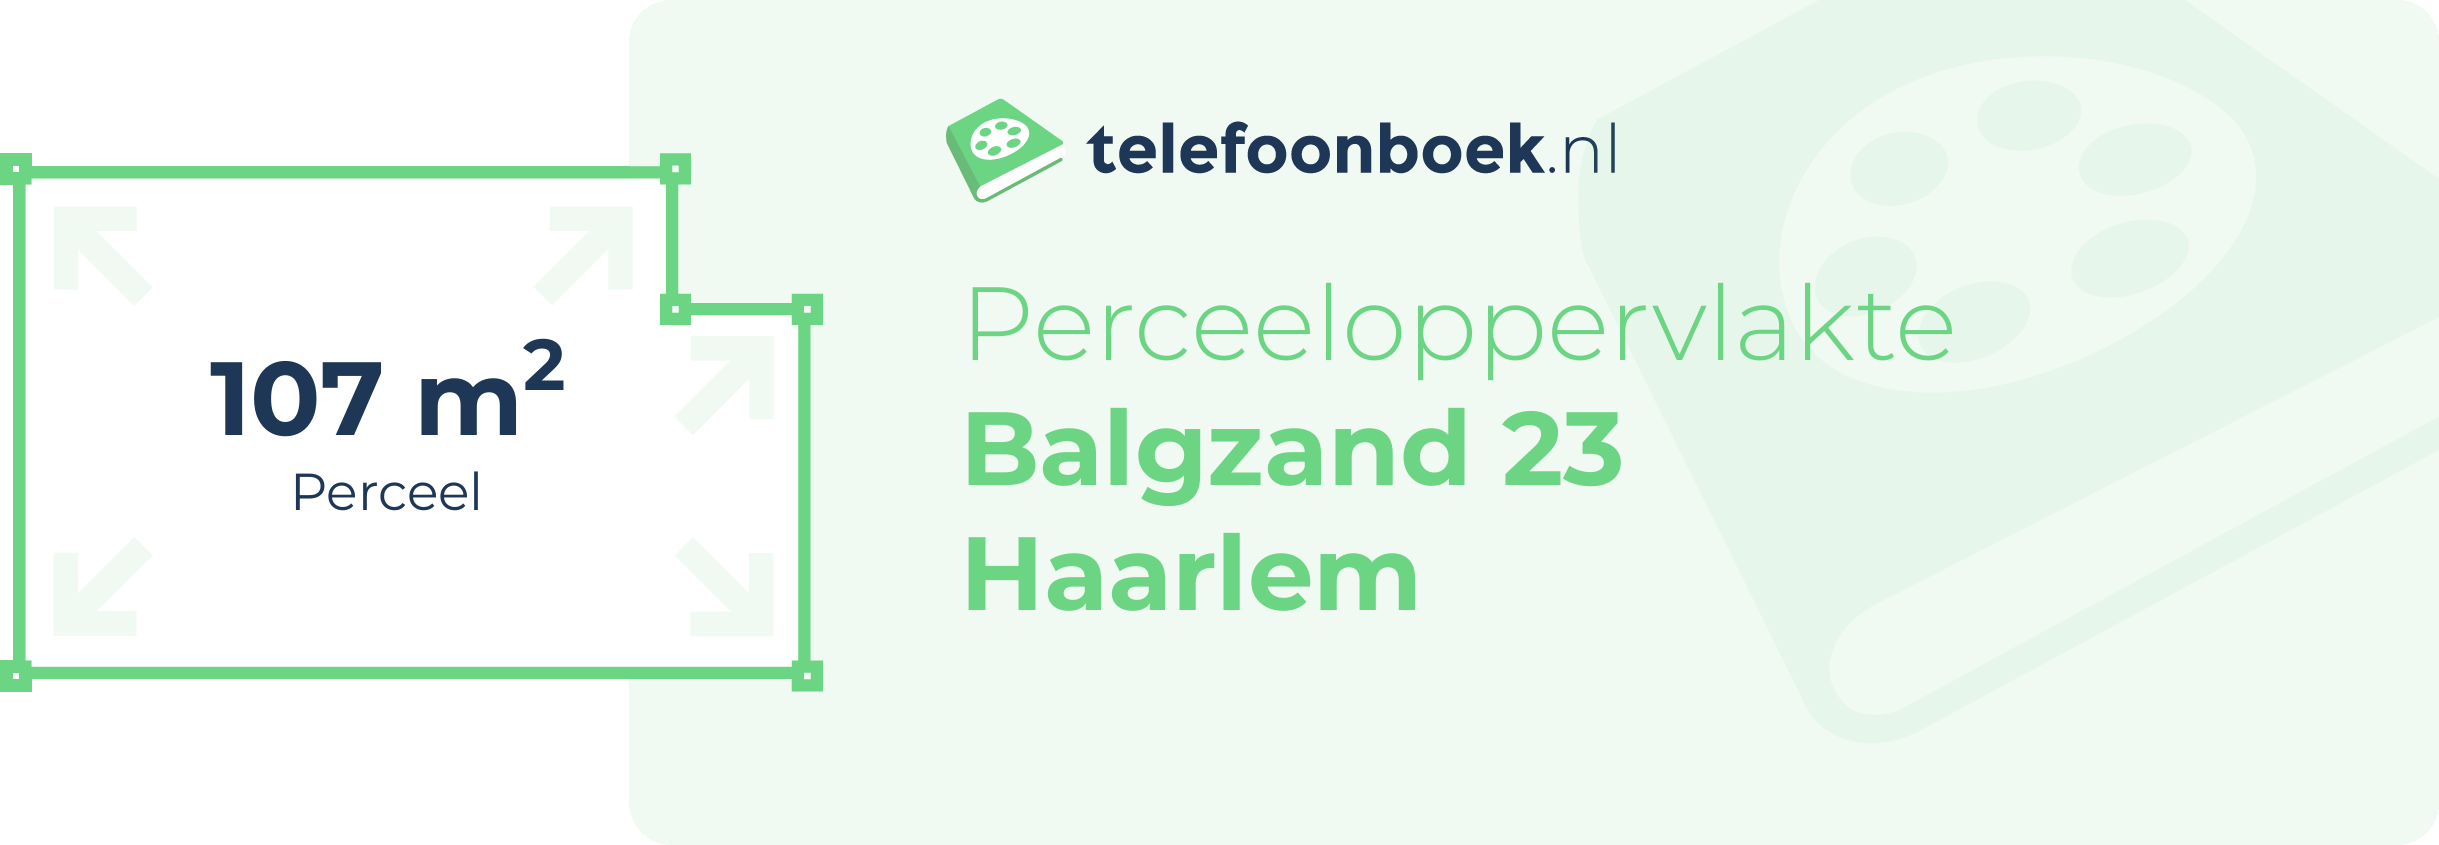 Perceeloppervlakte Balgzand 23 Haarlem